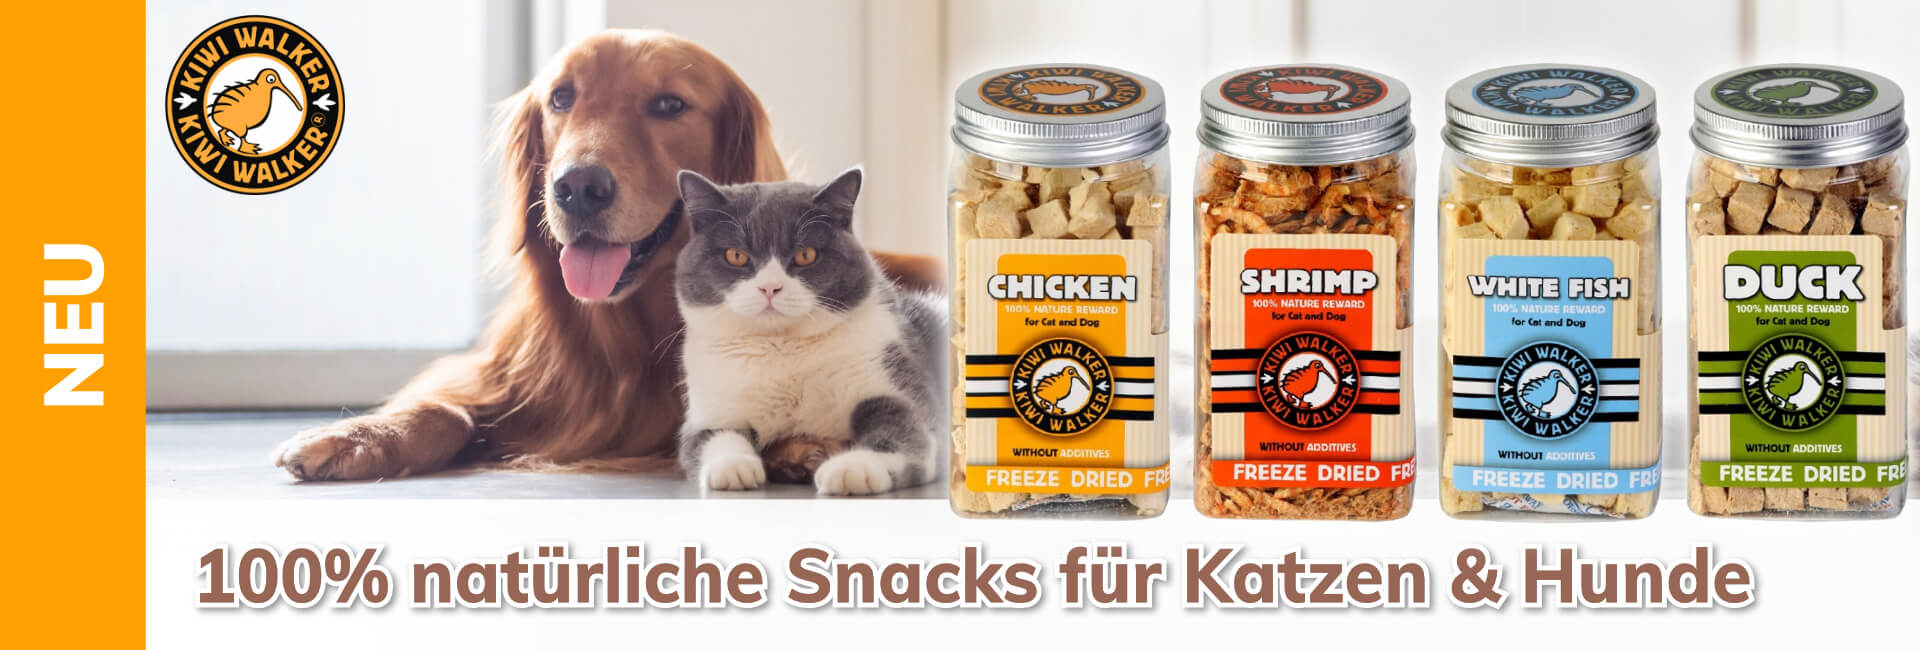 Kiwi Walker Snacks für Katzen & Hunde